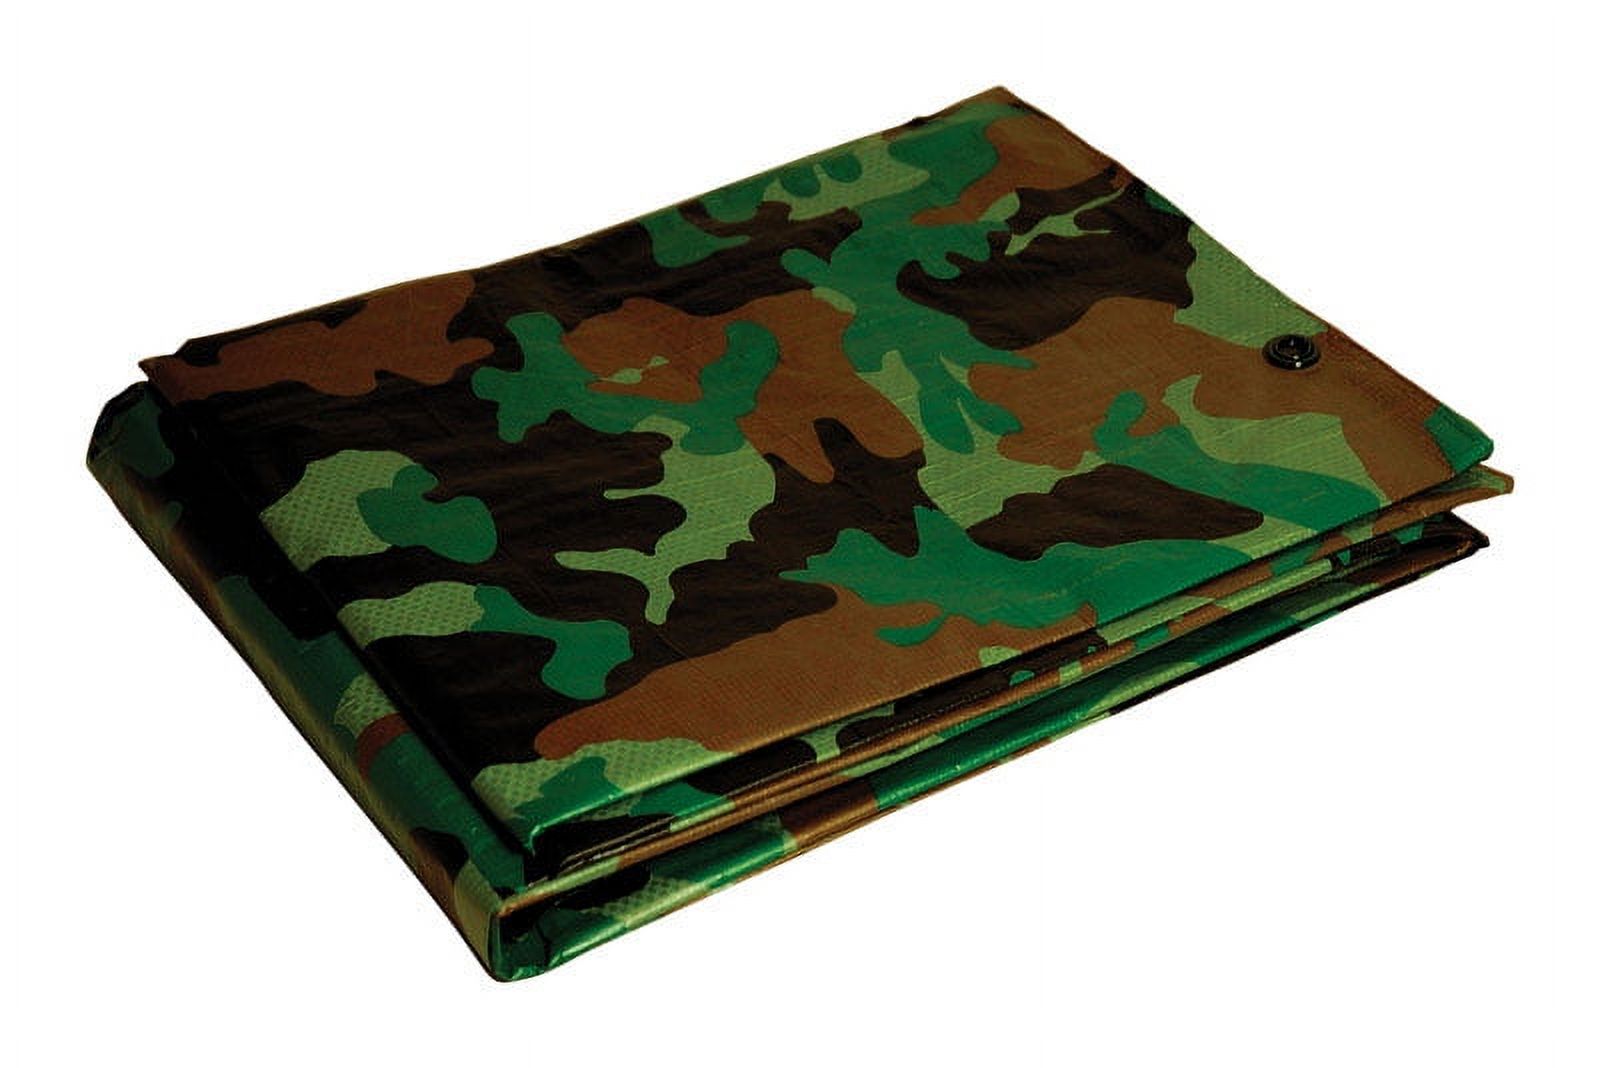 Foremost Dry Top 10 ft. x 12 ft. Medium Duty Polyethylene Tarp Camouflage - image 1 of 3